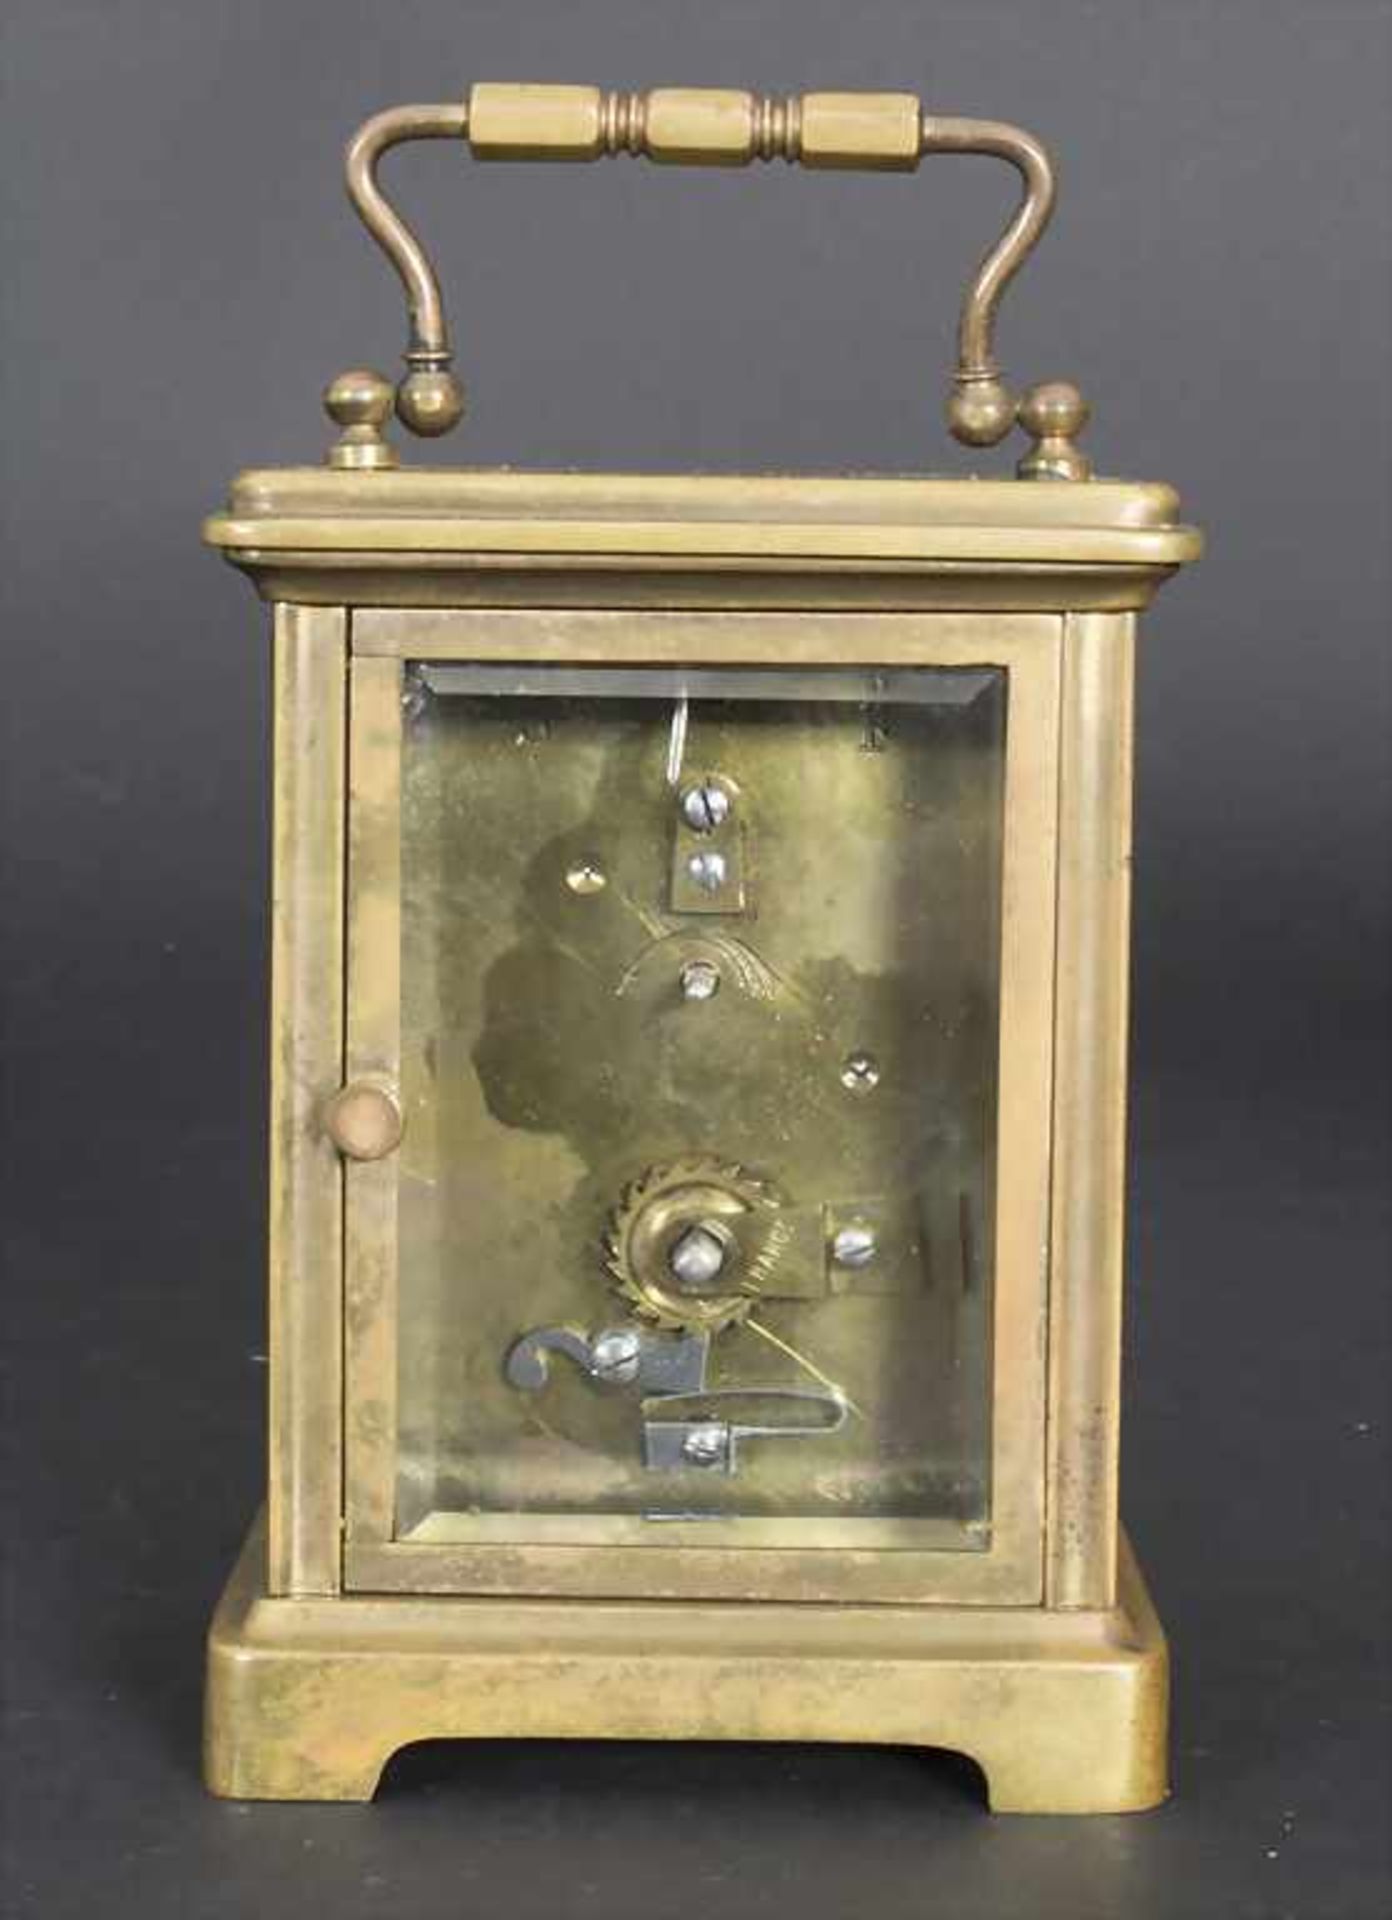 Reiseuhr / A travel clock, um 1900Material: Reiseuhr im Etui, mit Aufzug-Schlüssel,Gehäuse: rundum - Image 3 of 7